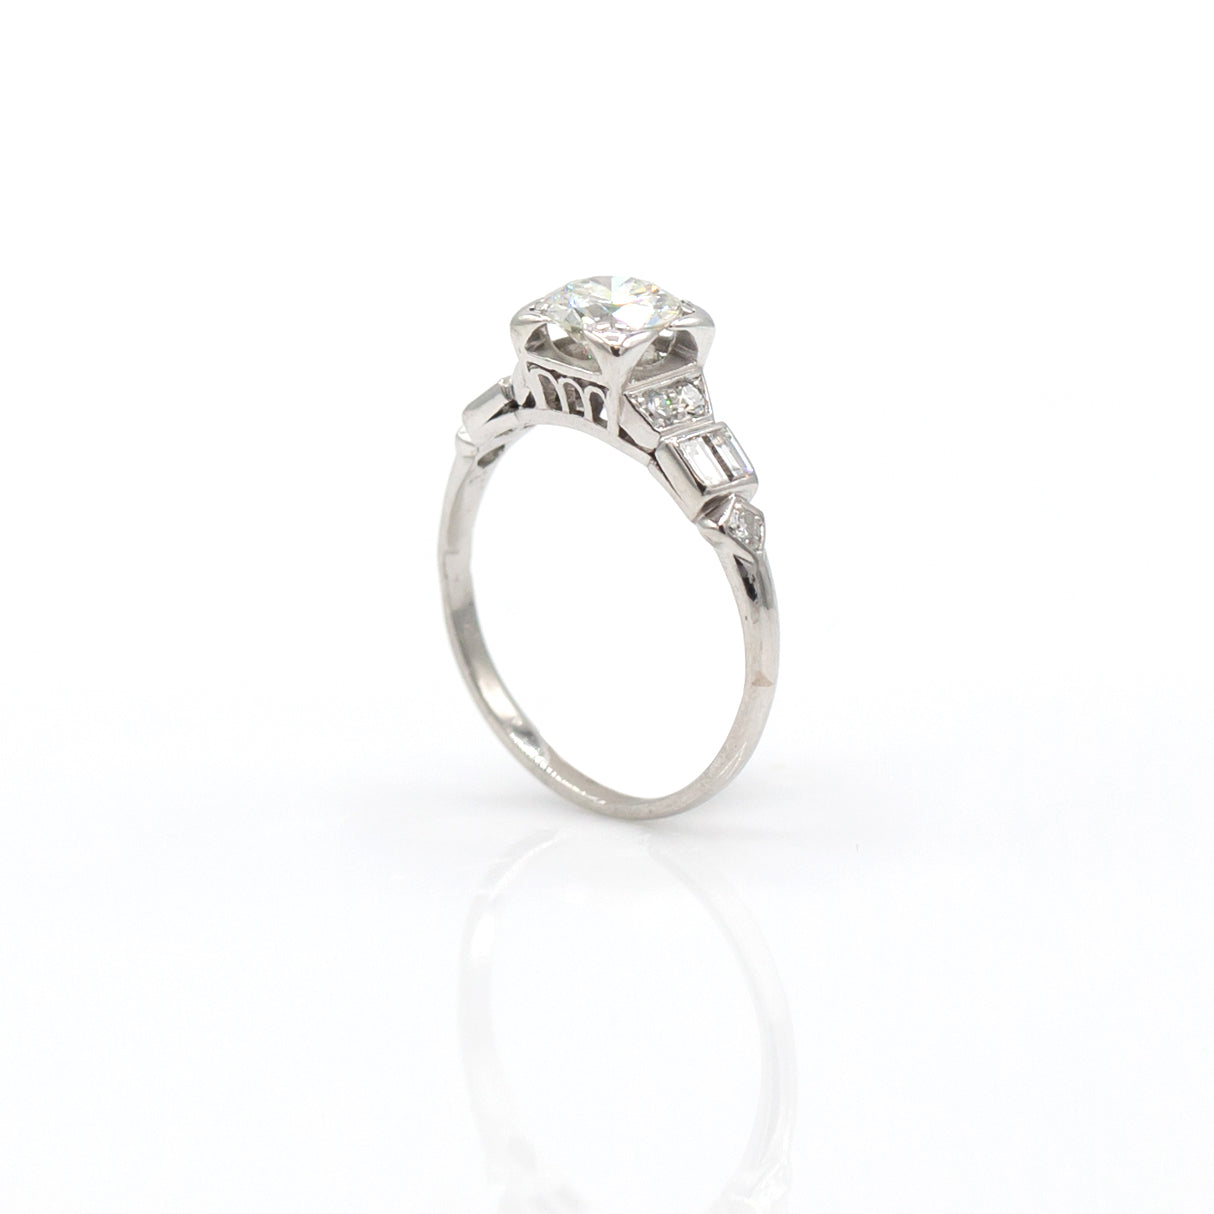 Estate Collection Art Deco Diamond Engagement Ring